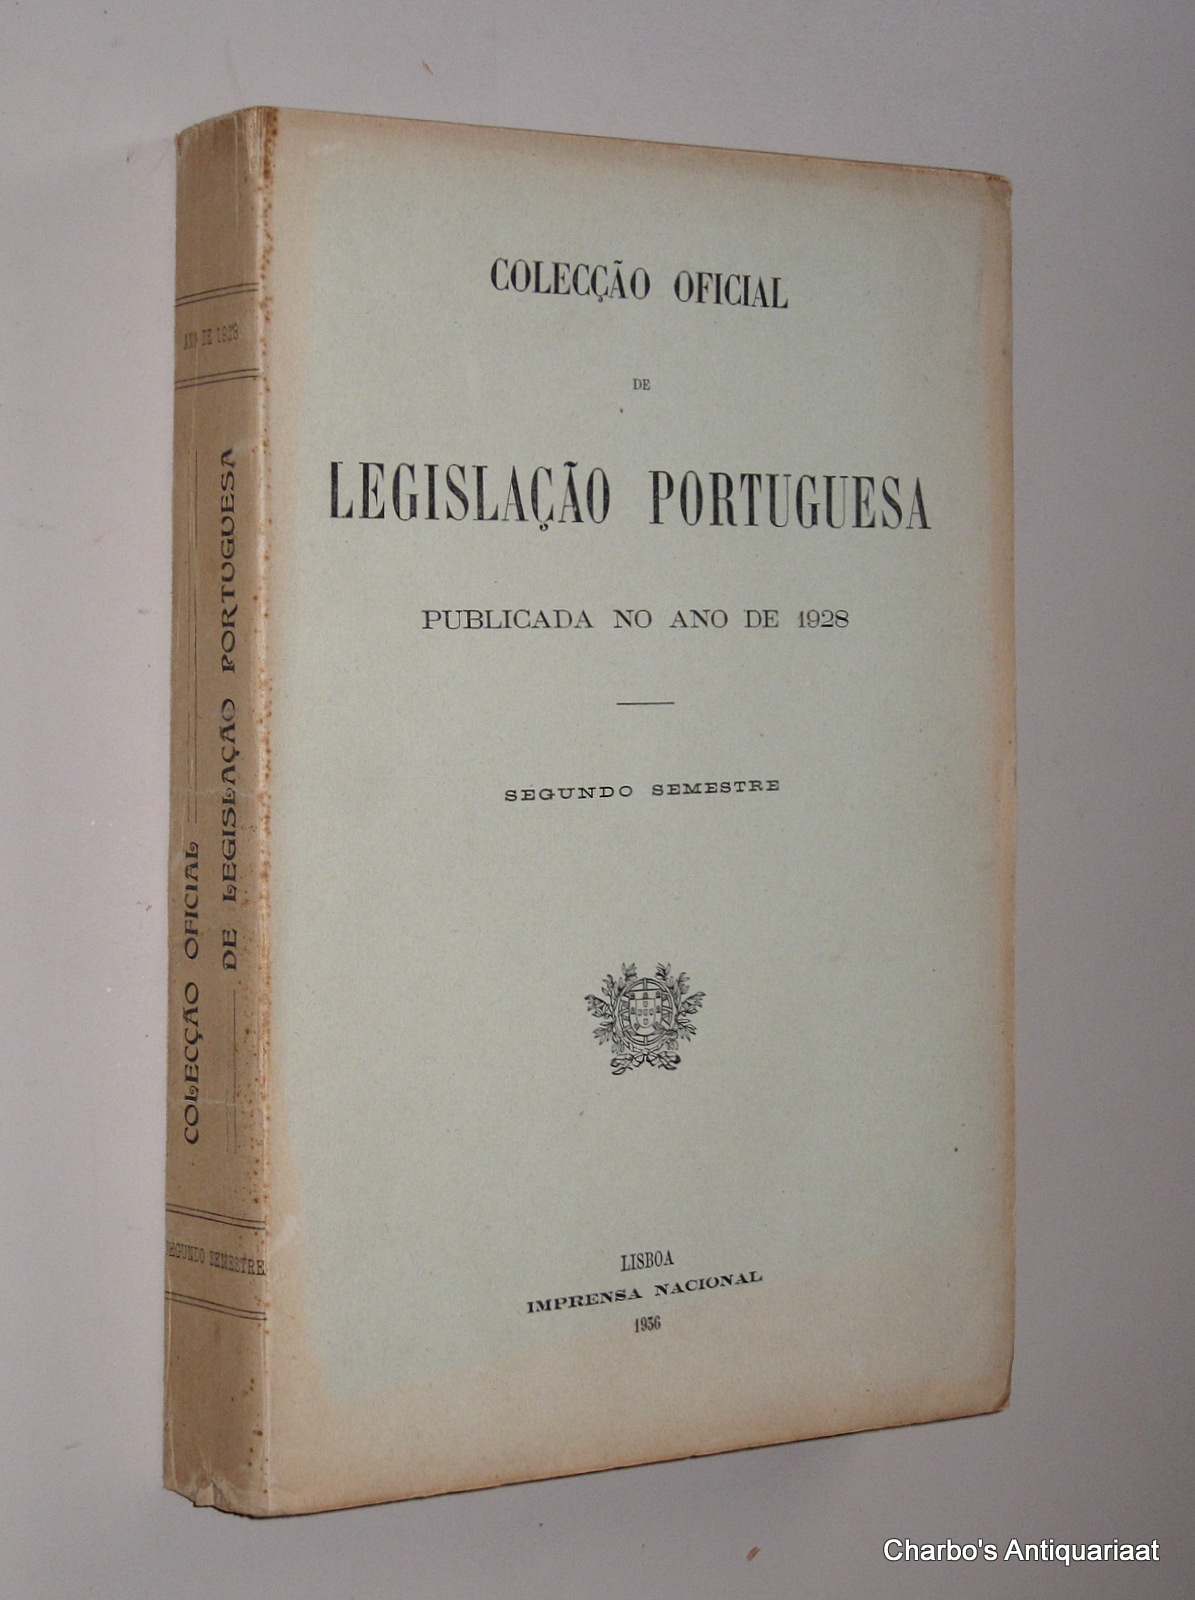 N/A, -  Coleco oficial de legislao portuguesa, publicada no ano de 1928, Segundo semestre.